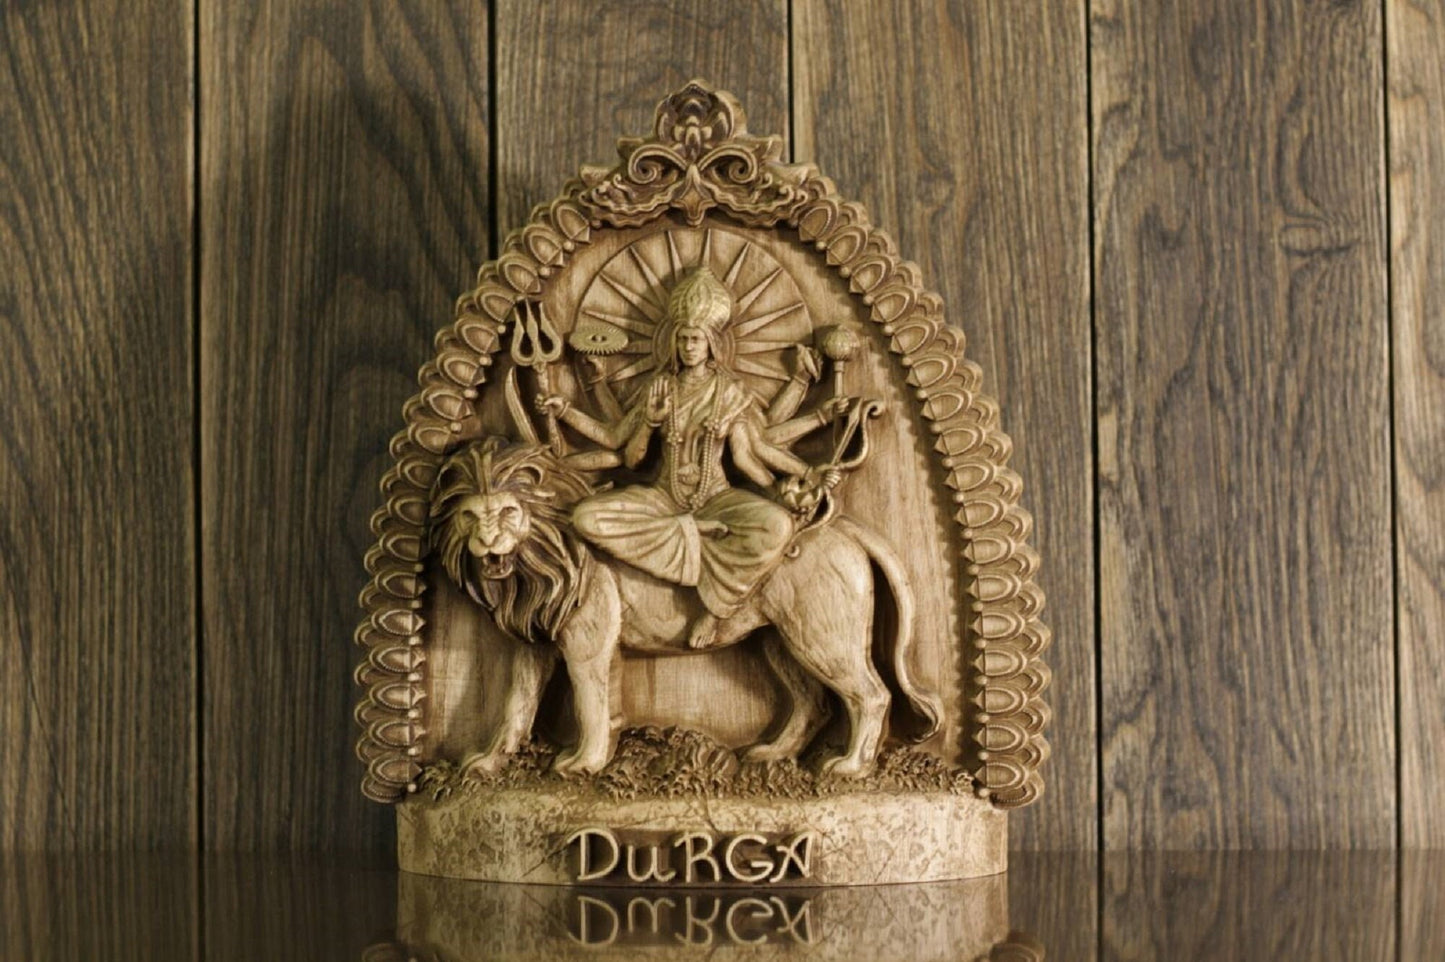 Wooden Durga Statue - Art Hindu India Statue